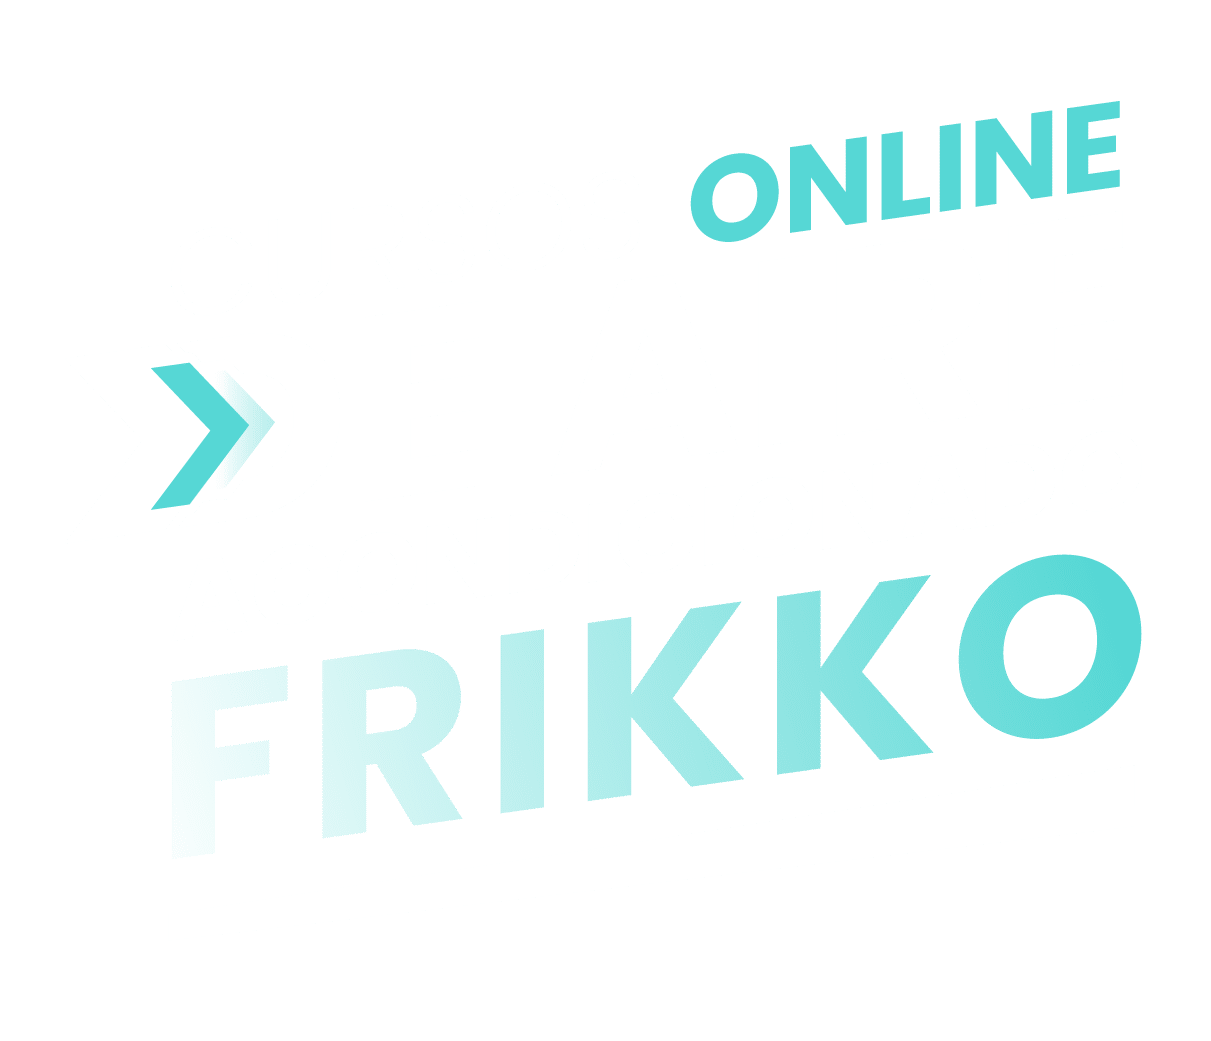 2022-ABR-FRIKKO-CURSOS-ONLINE-LANDING-03